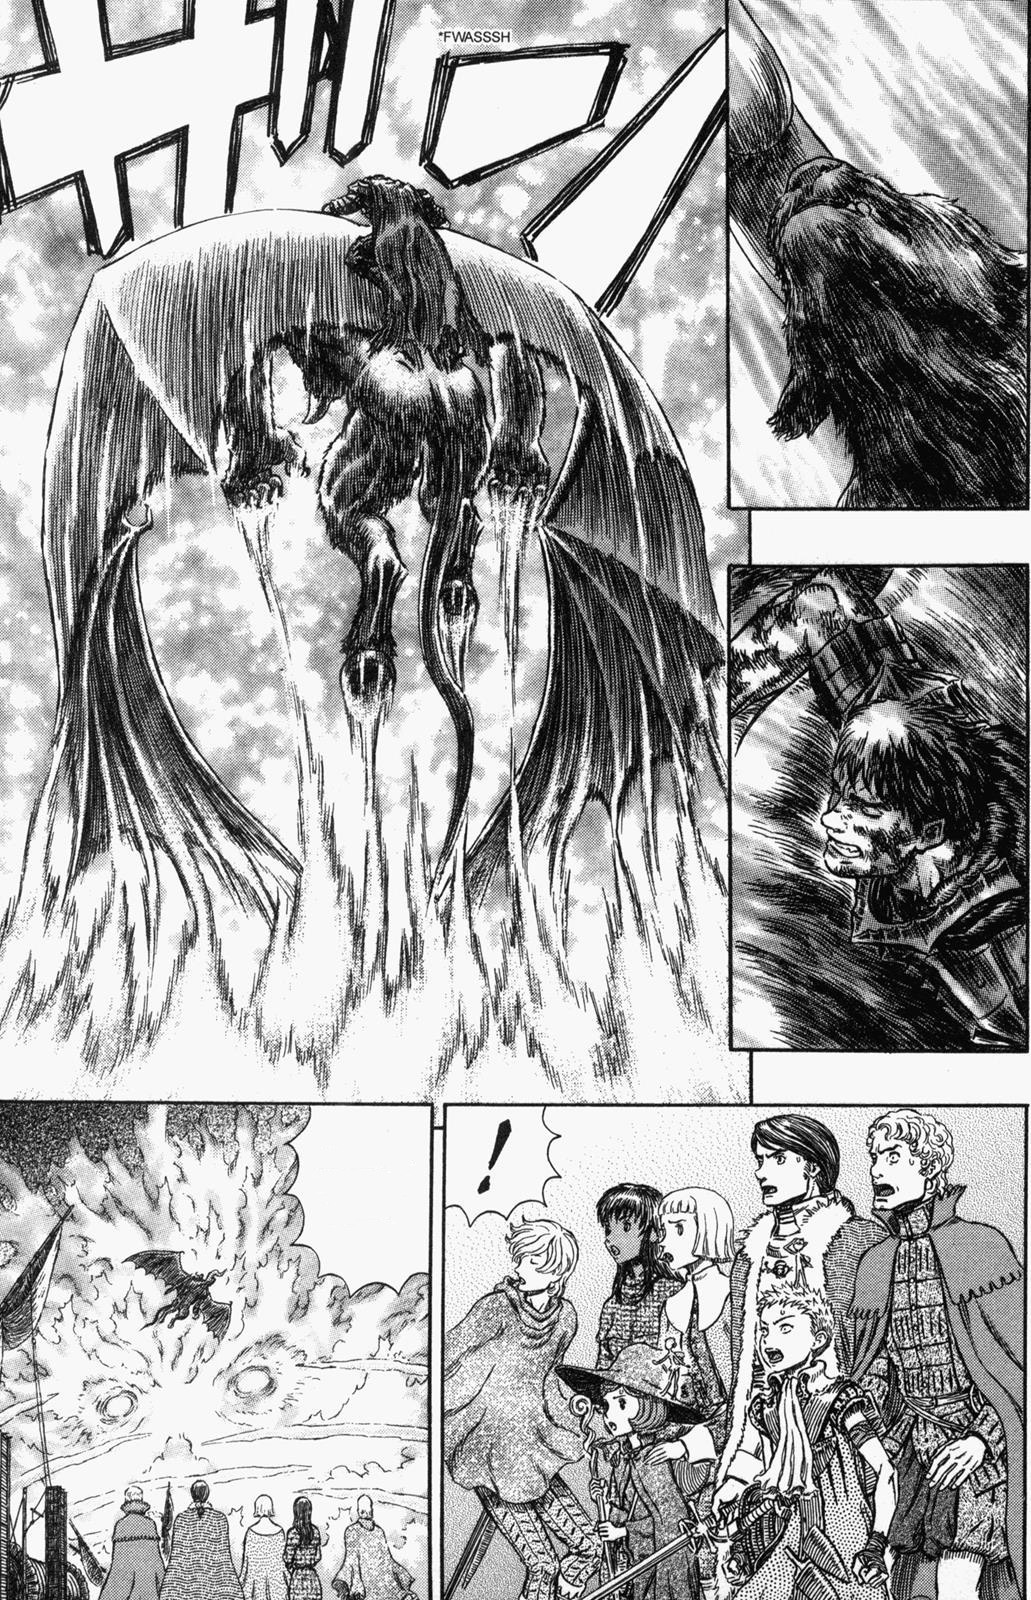 Handrawing moment Guts Vs Apostle on Eclipse from Berserk 1997 anime : r/ Berserk